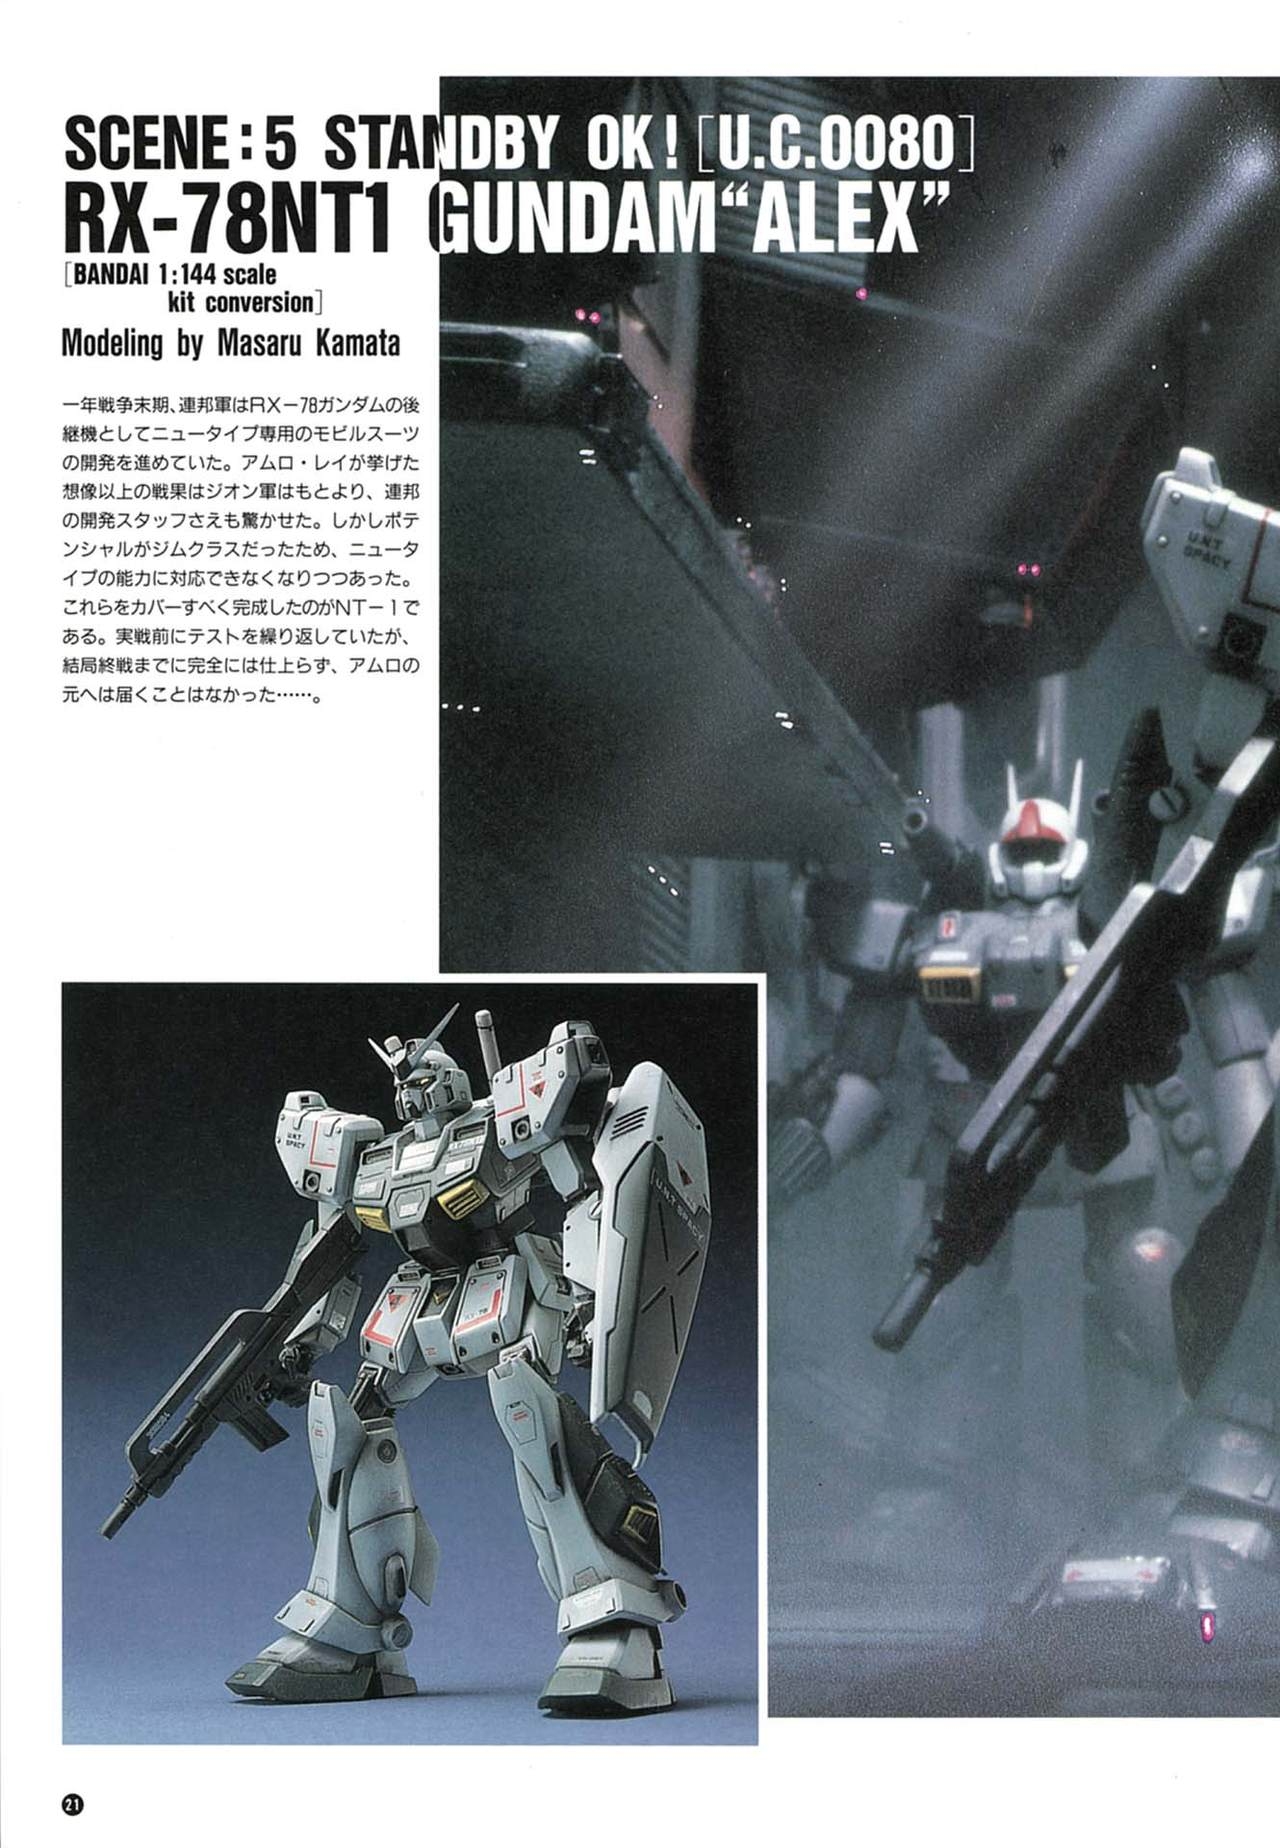 [Kazuhisa Kondo] Kazuhisa Kondo 2D & 3D Works - Go Ahead - From Mobile Suit Gundam to Original Mechanism 20